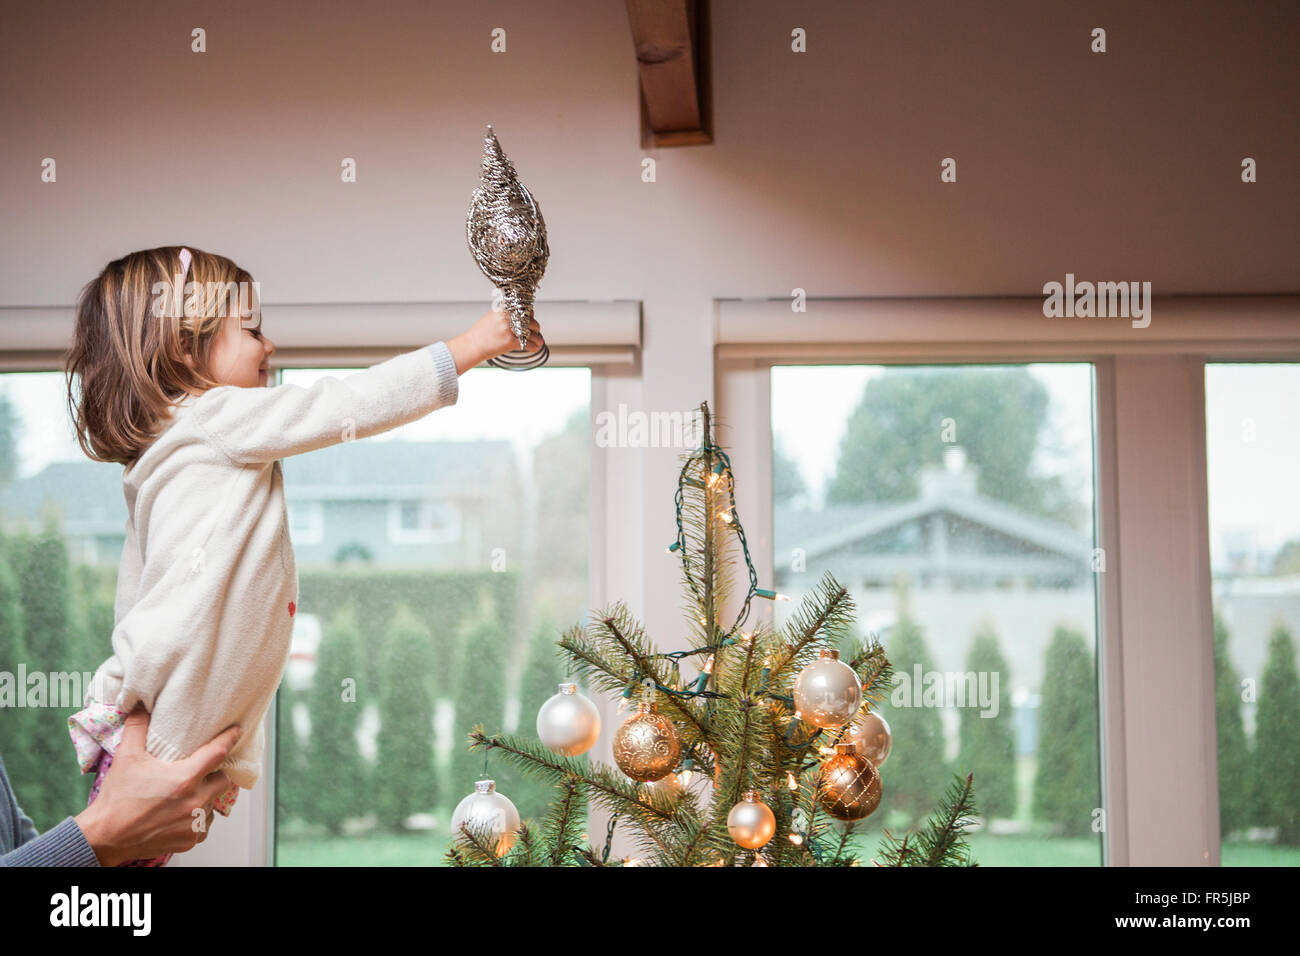 Toddler girl putting star on Christmas tree Stock Photo